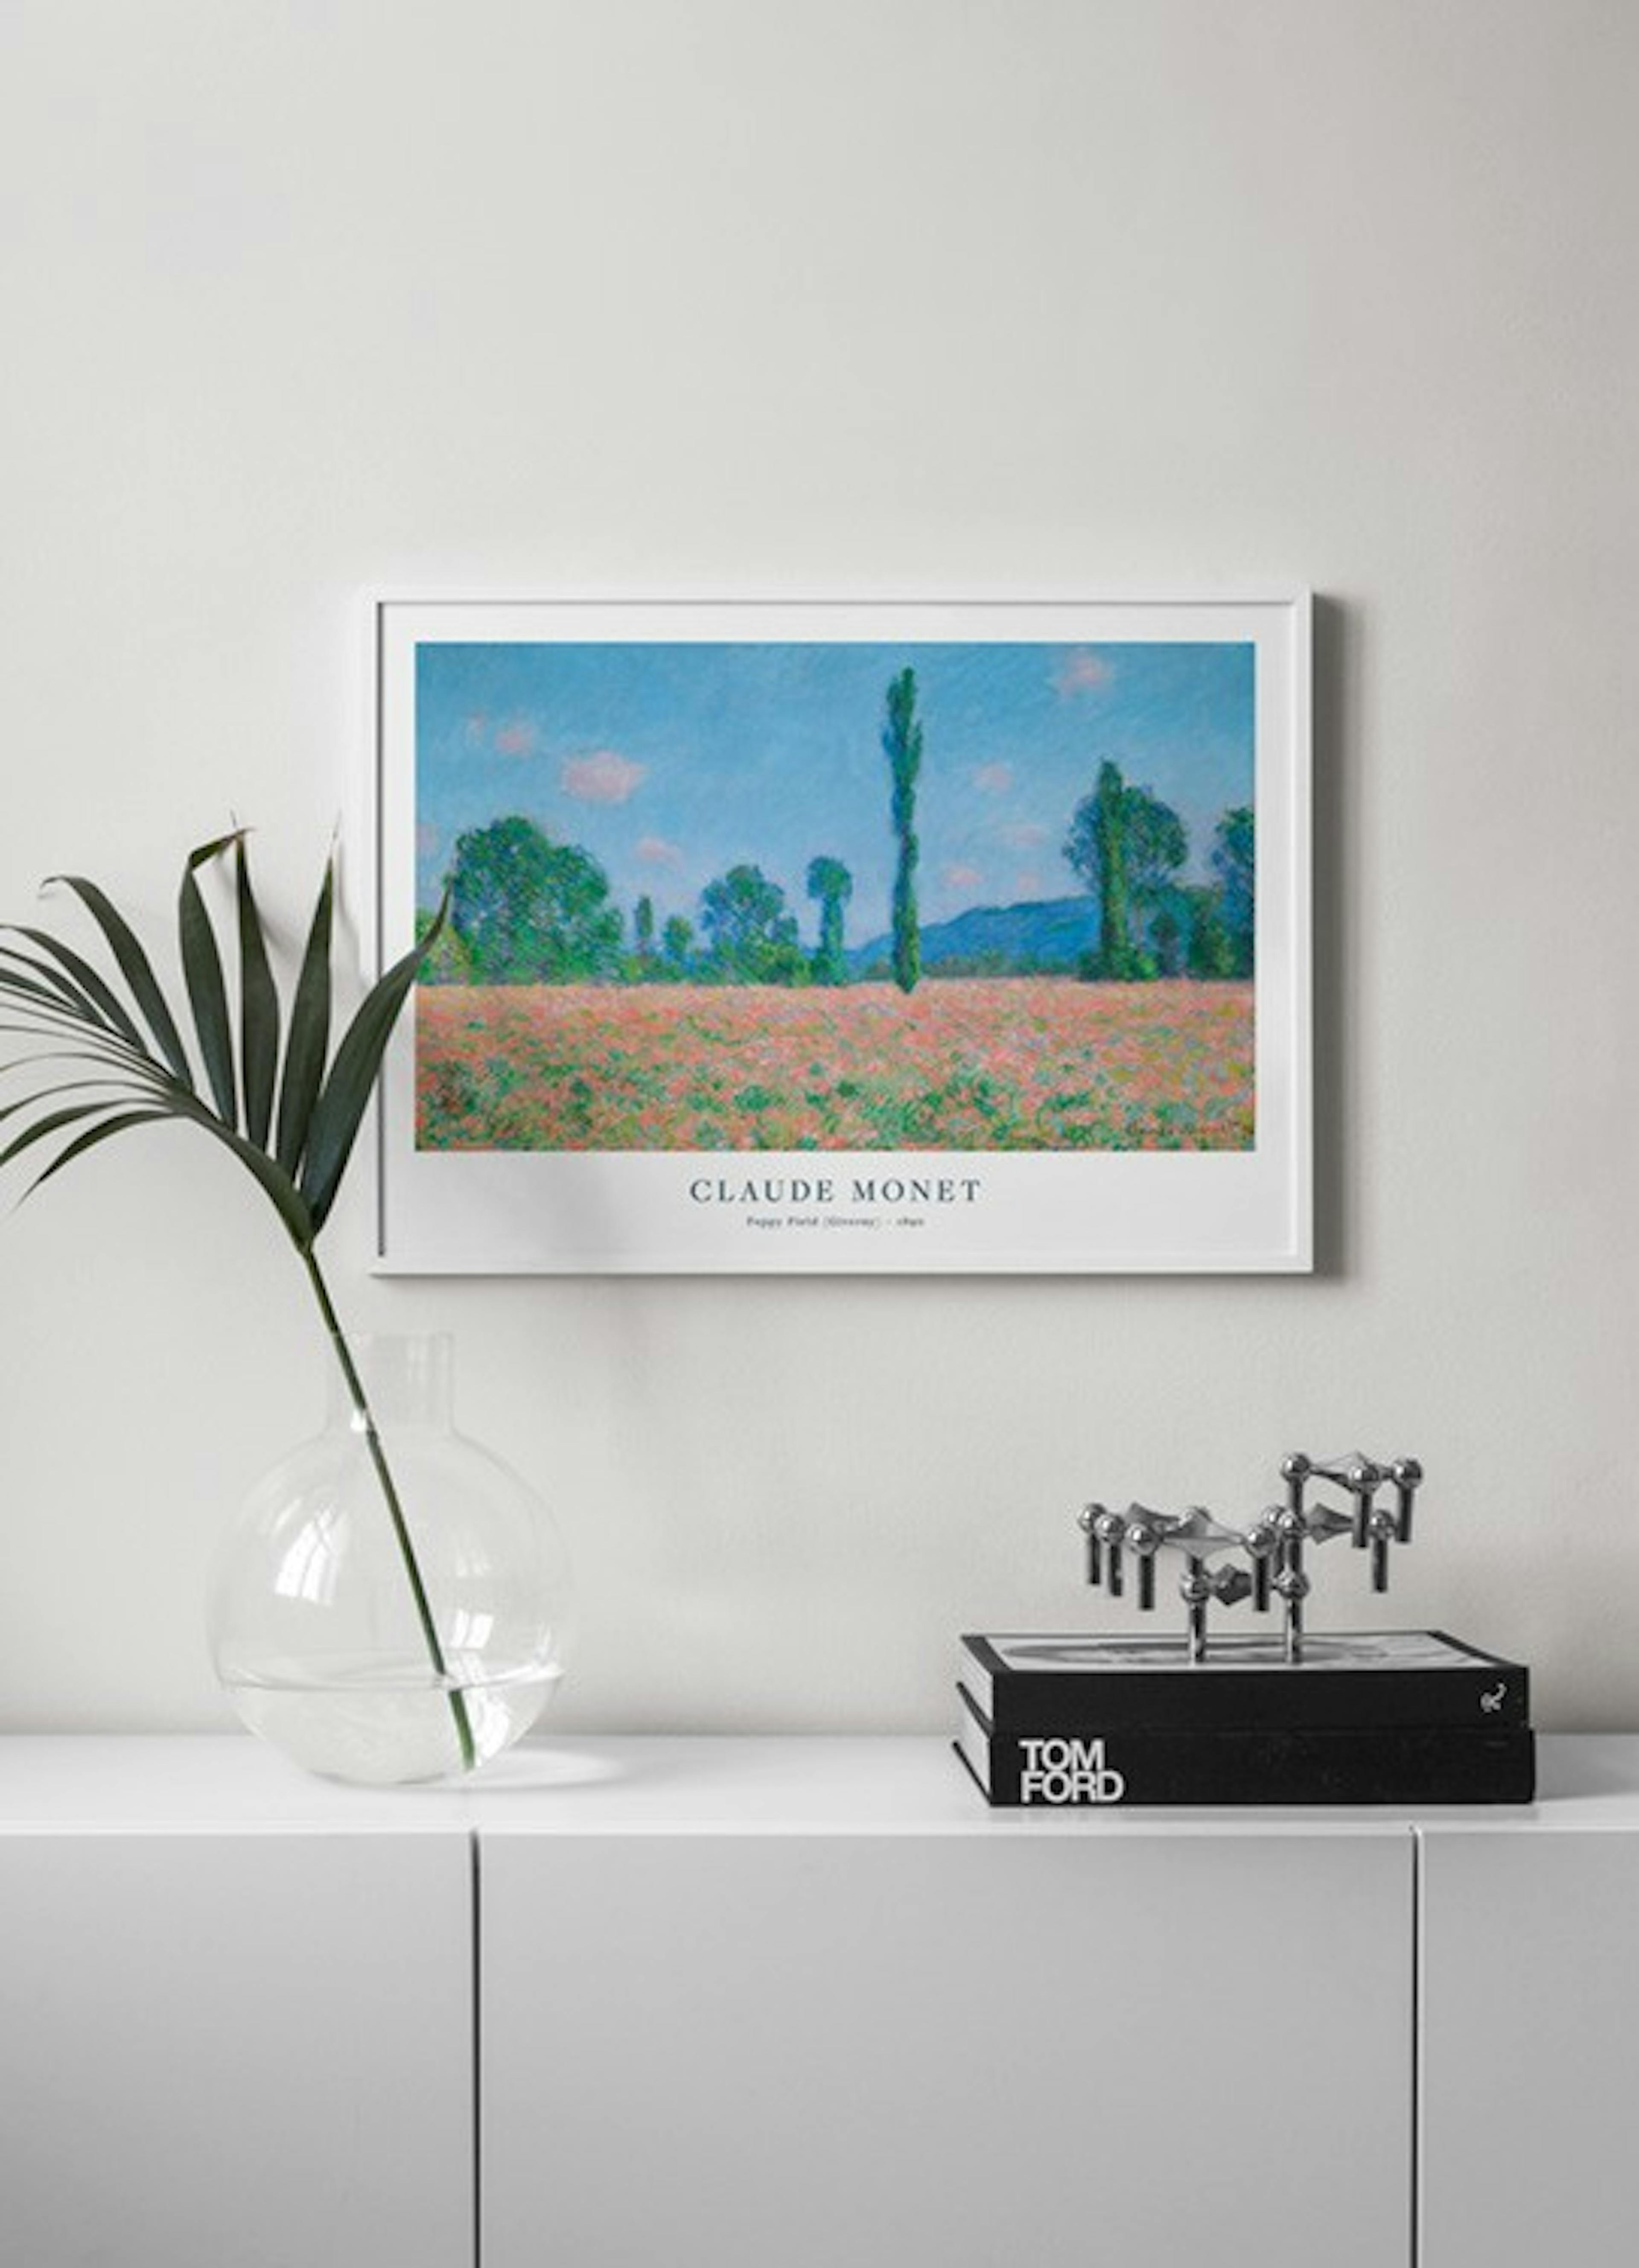 Monet - Poppy Field (Giverny) Print